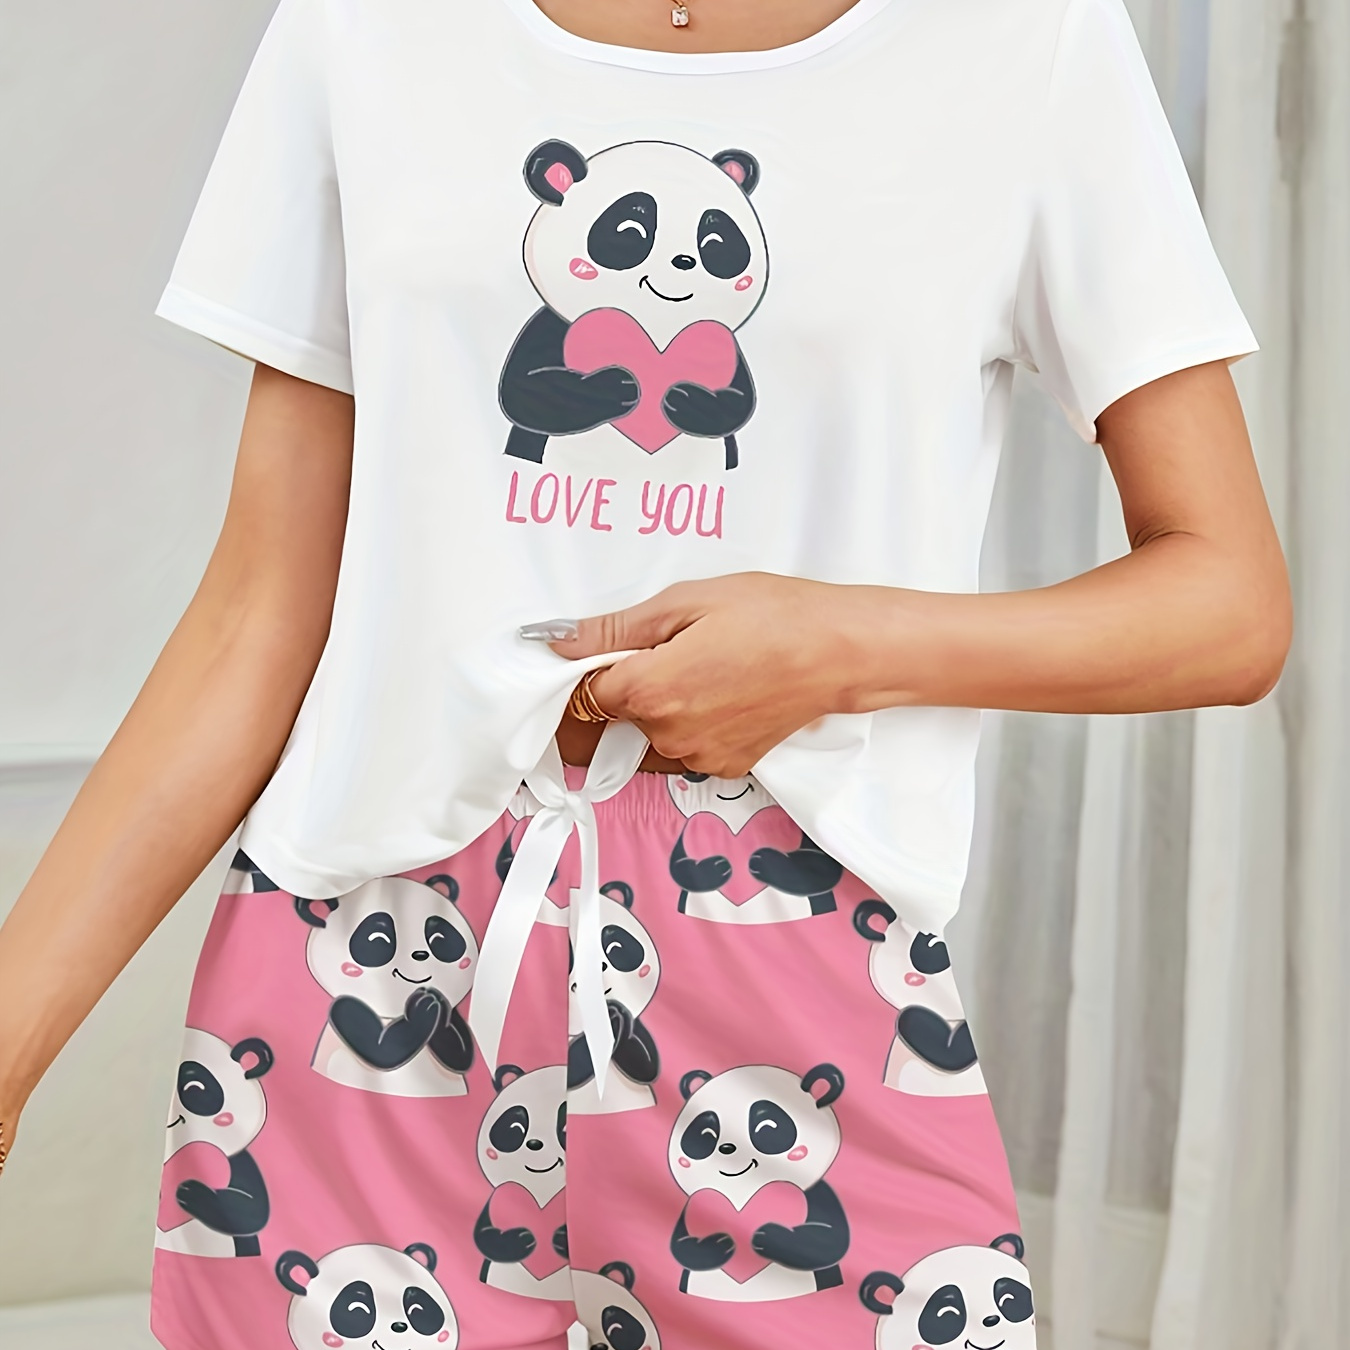 

Cute Panda With Heart & Letter Print Pajama Set, Short Sleeve Round Neck Top & Elastic Shorts, Women's Sleepwear